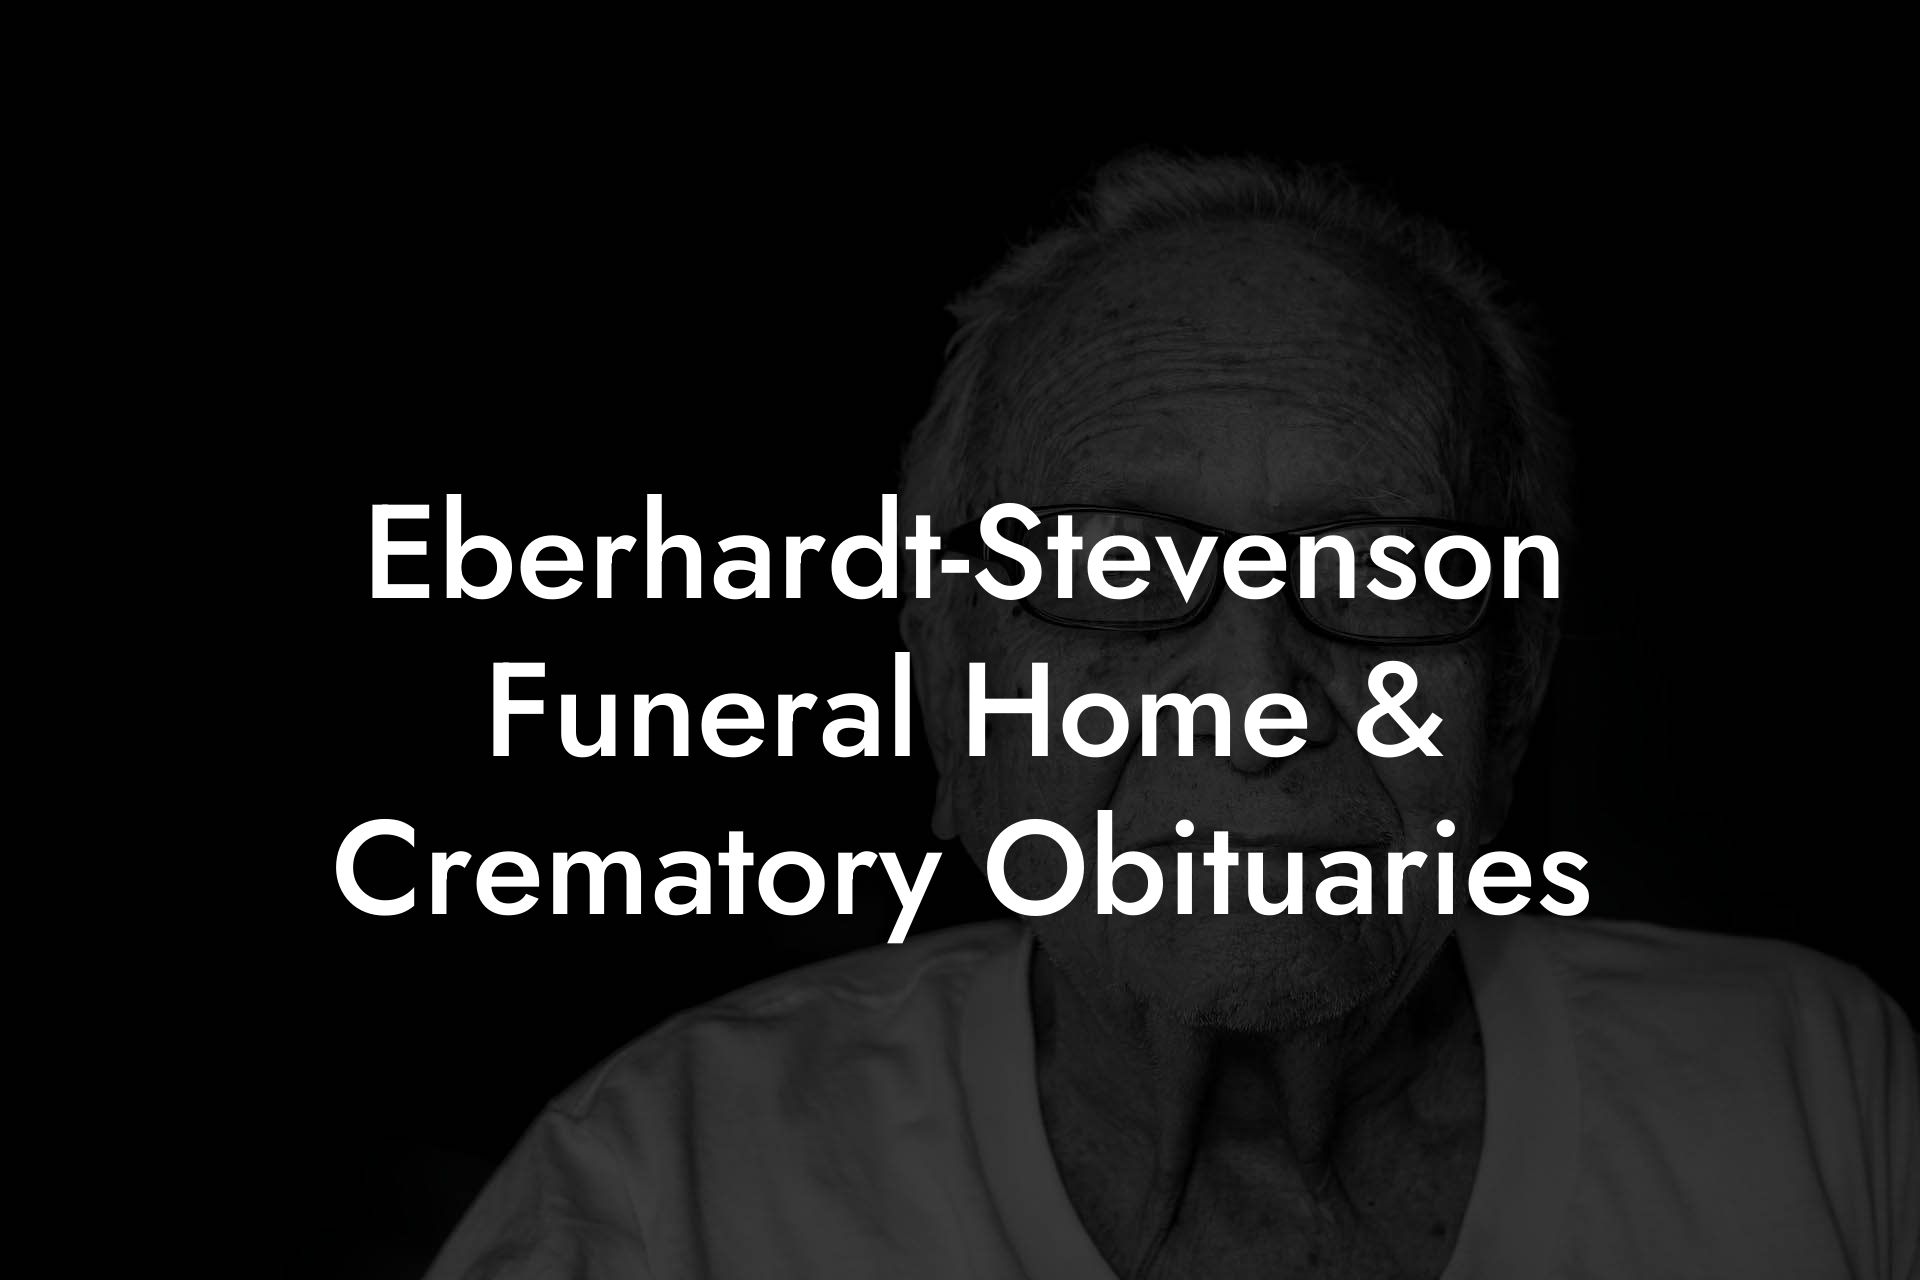 Eberhardt-Stevenson Funeral Home & Crematory Obituaries